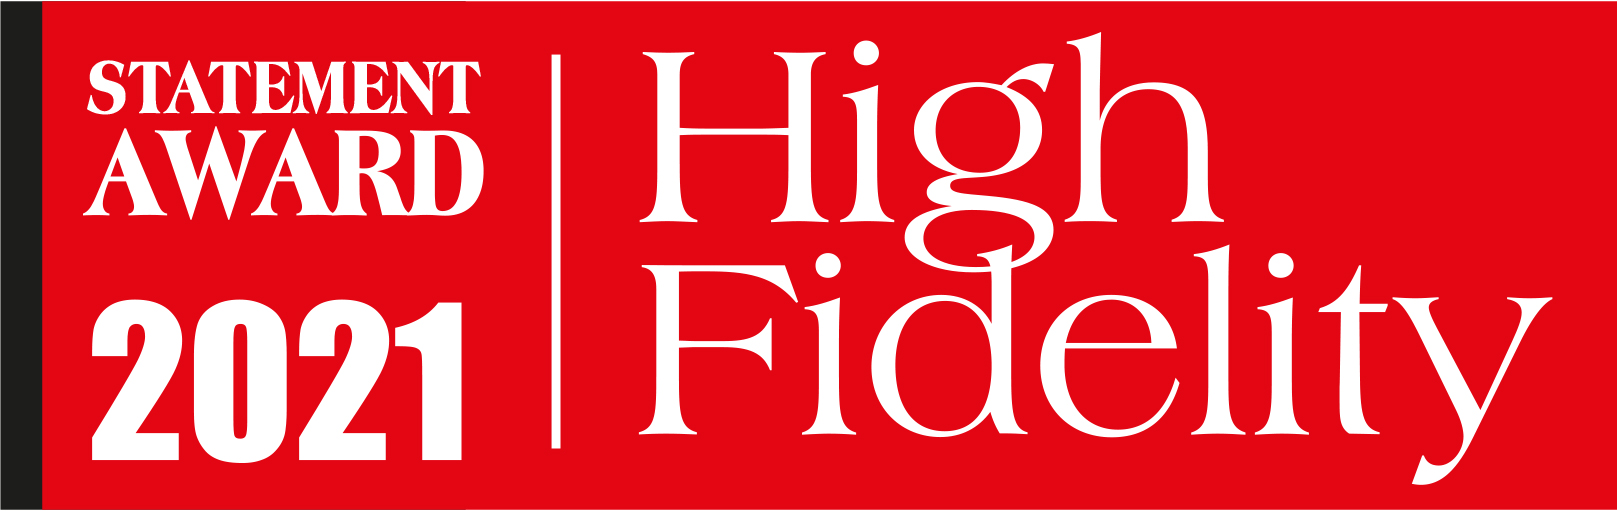 High_Fidelity_Statement_Award2021